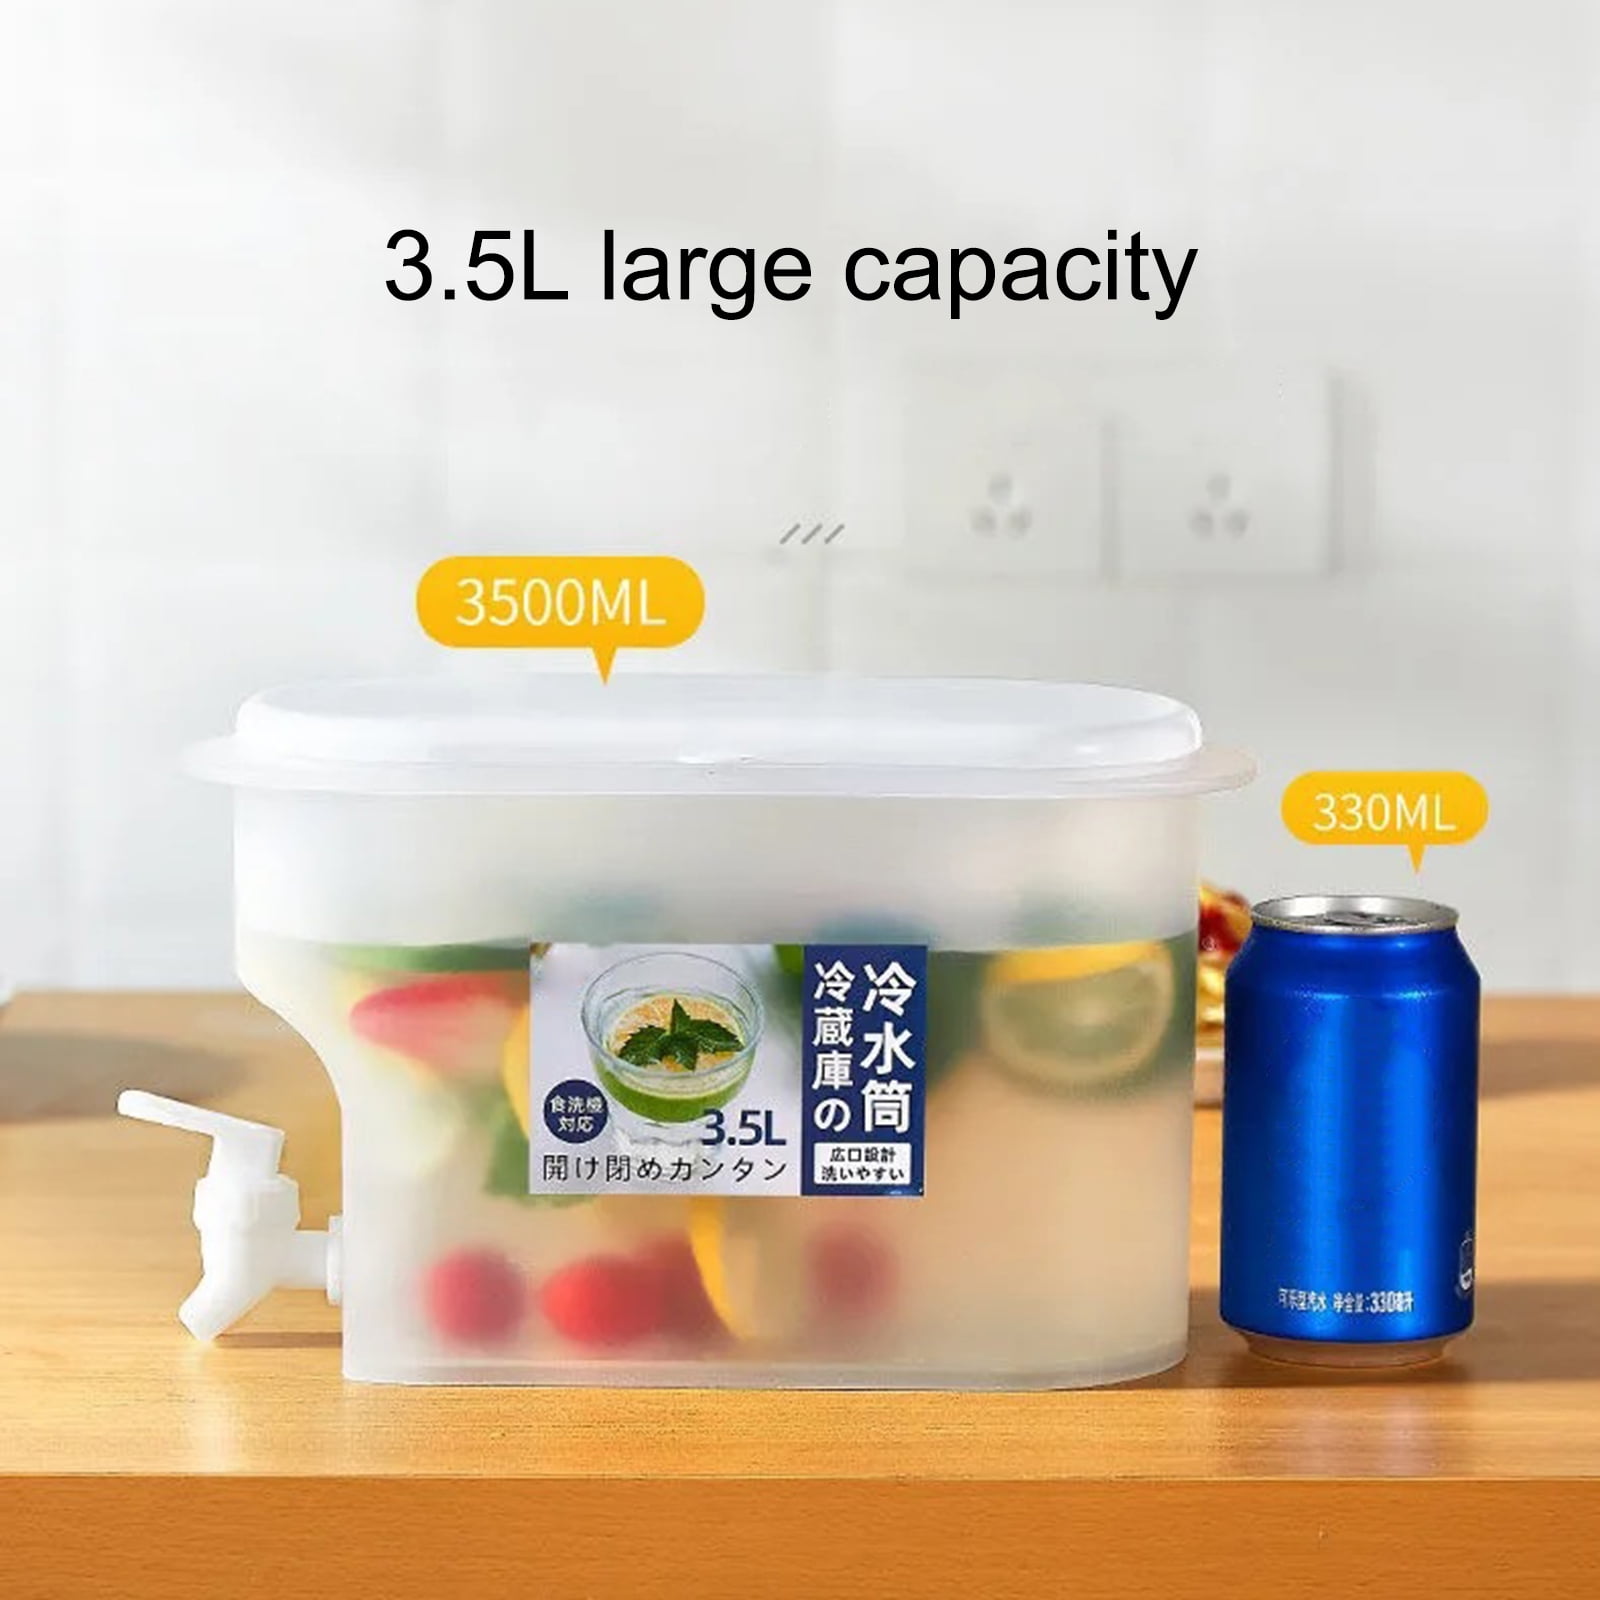 Elsjoy Plastic Drink Dispenser with Spigot, 1.2 Gallon Beverage Dispenser  Cold Drink Container for Iced Tea, Lemonade, Fridge, Bar, Party, Lock Lid